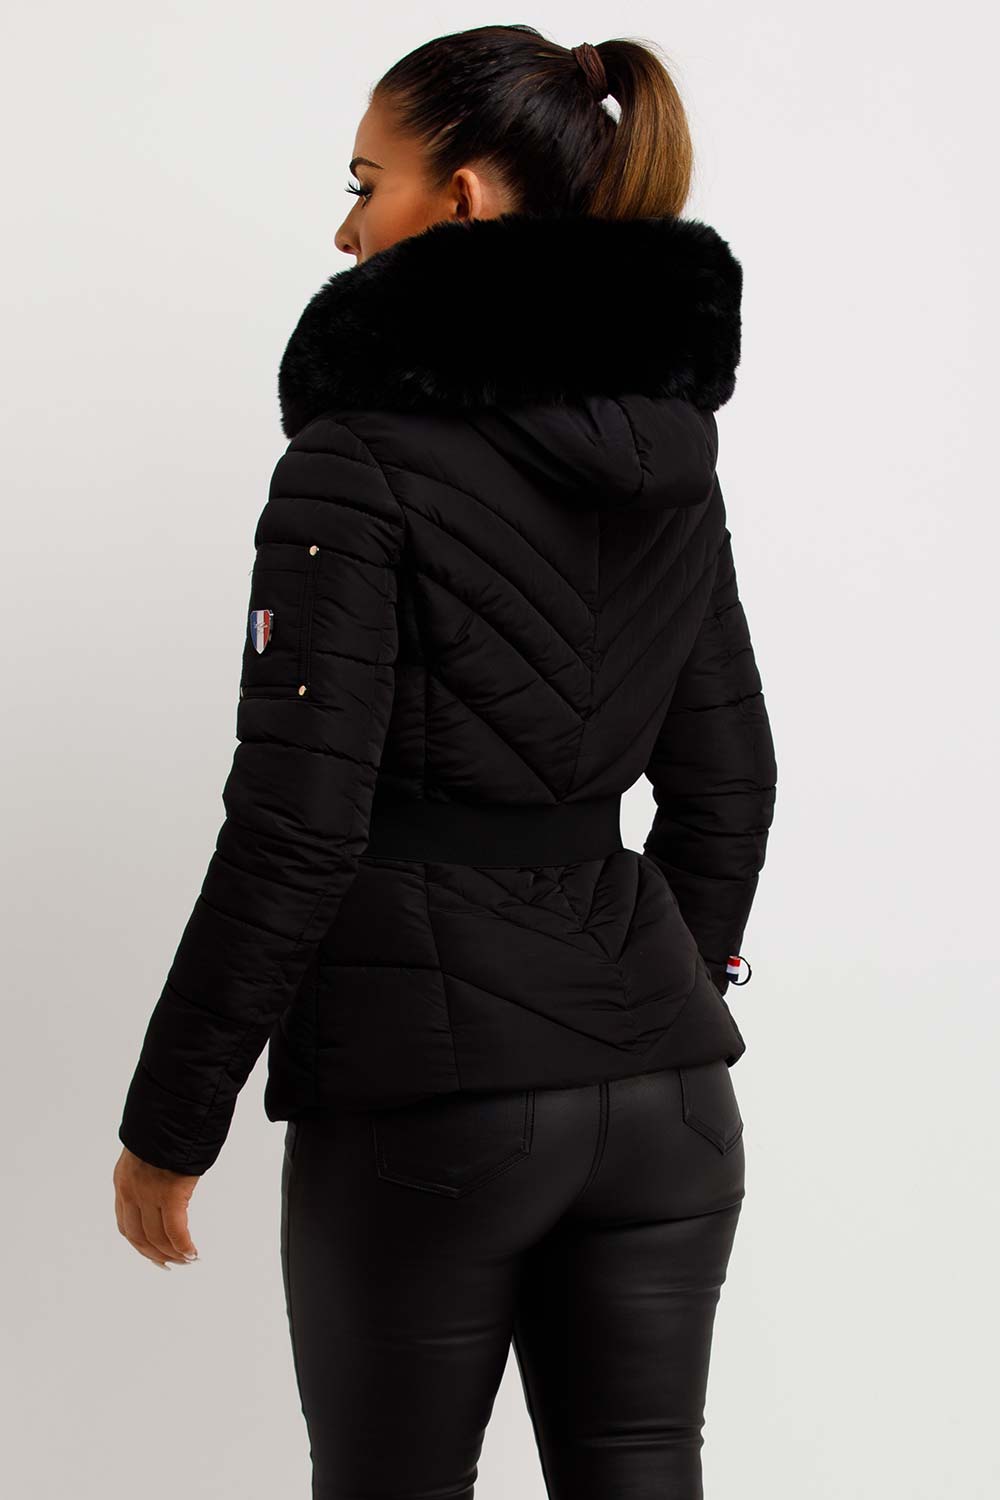 Women's Puffer Jacket With Fur Hood And Belt Black – Styledup.co.uk